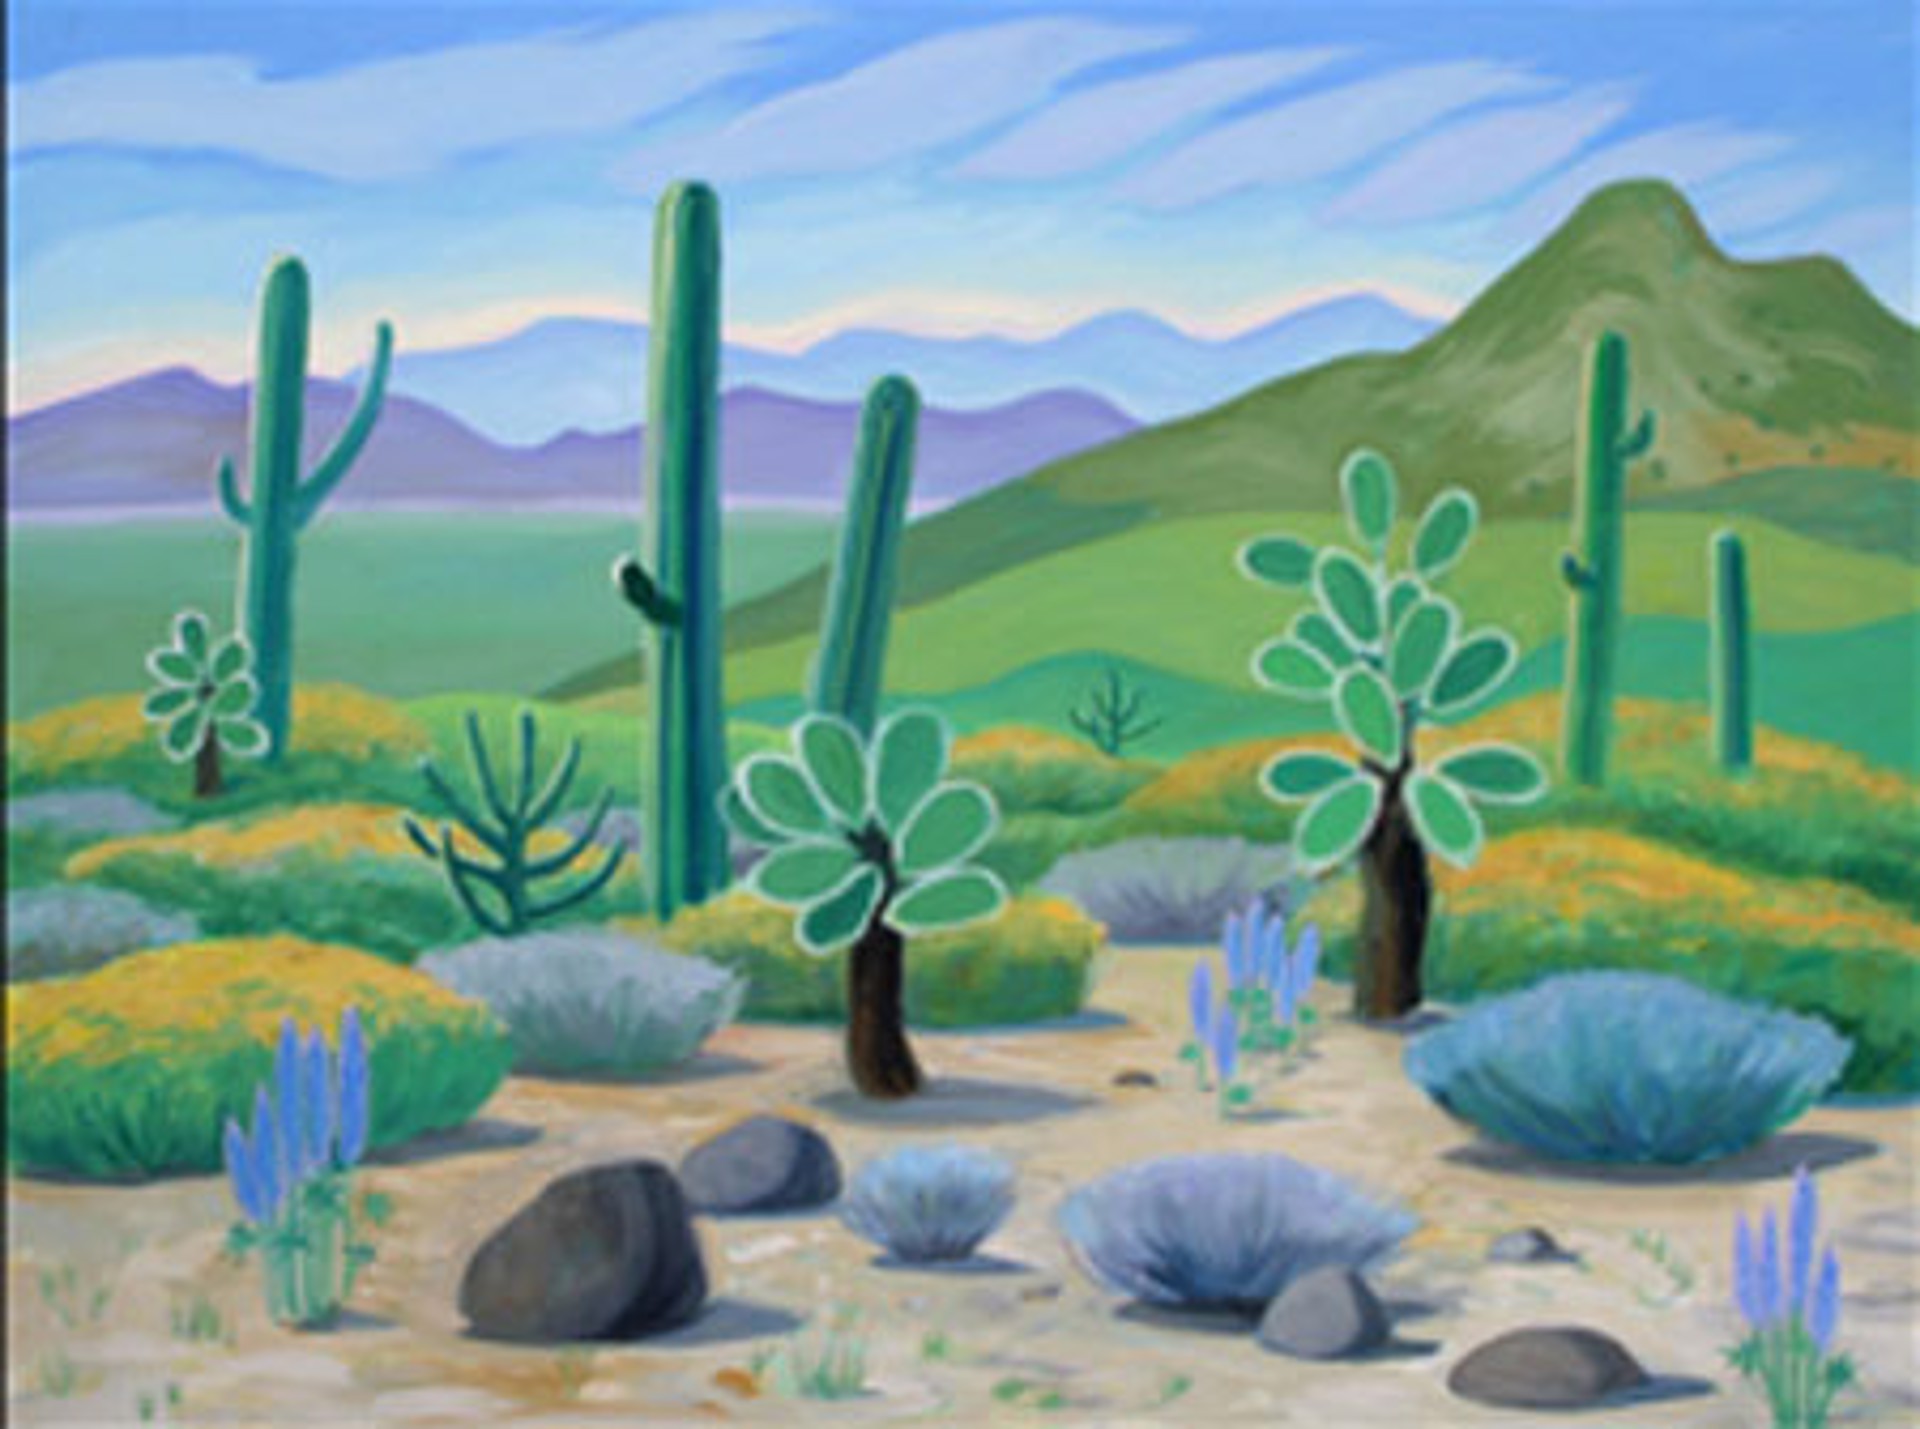 The Desert in Bloom by Doris McCarthy